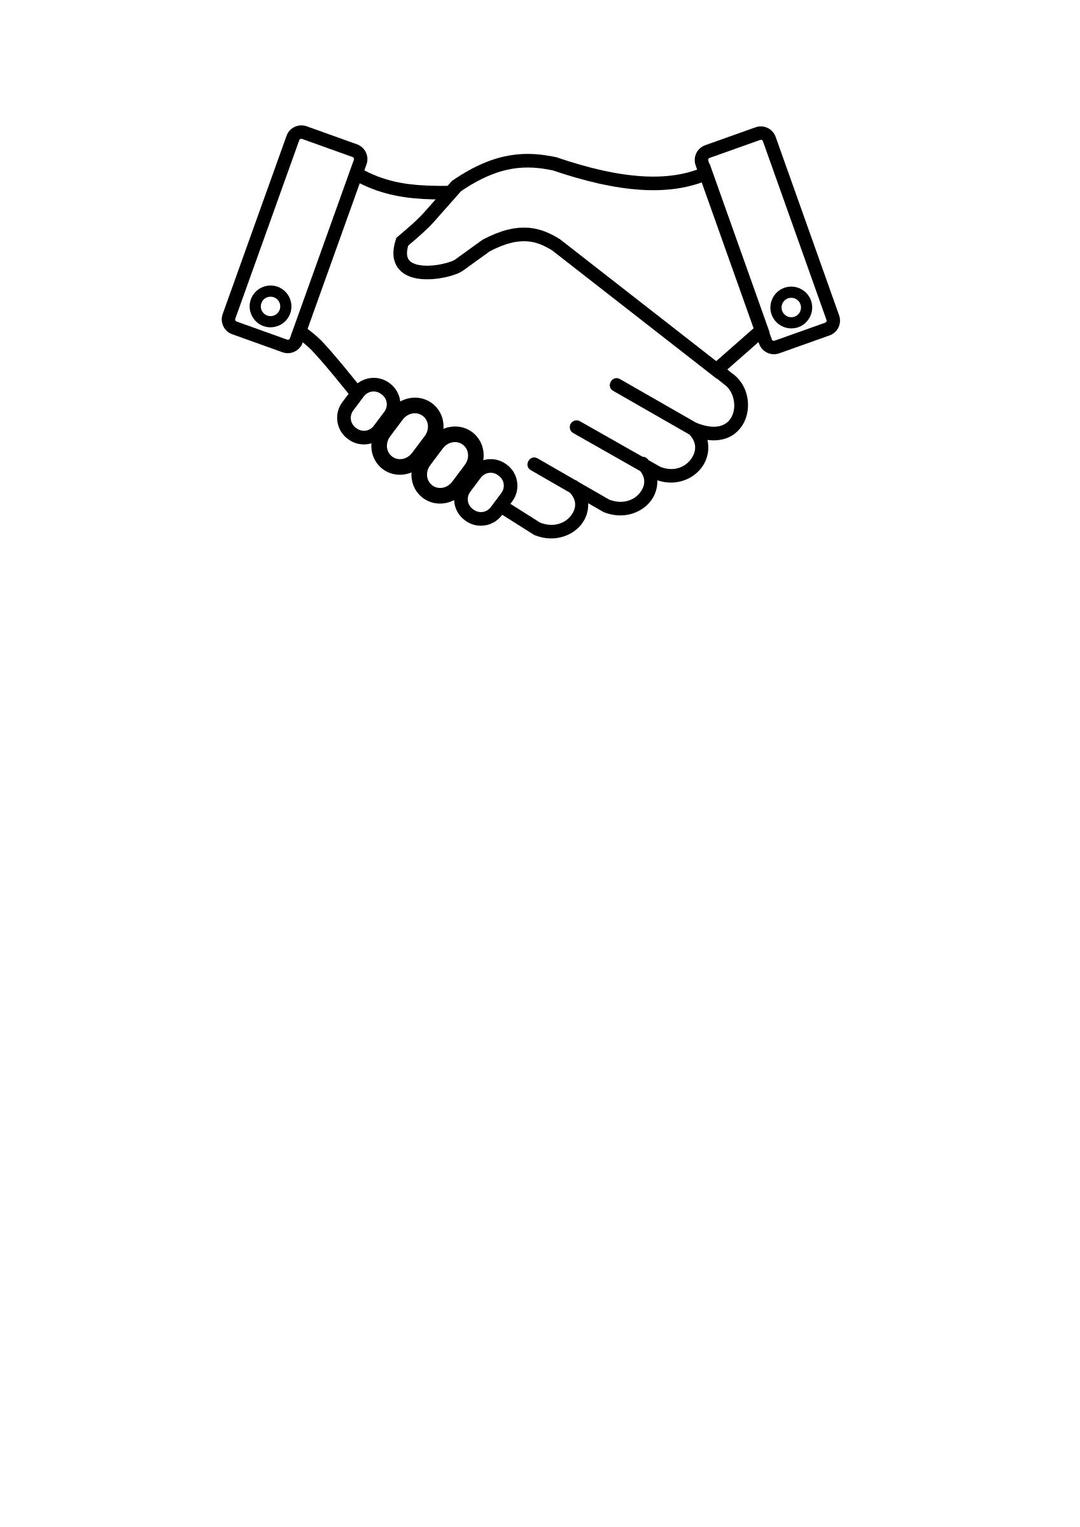 Handshake 002 png transparent